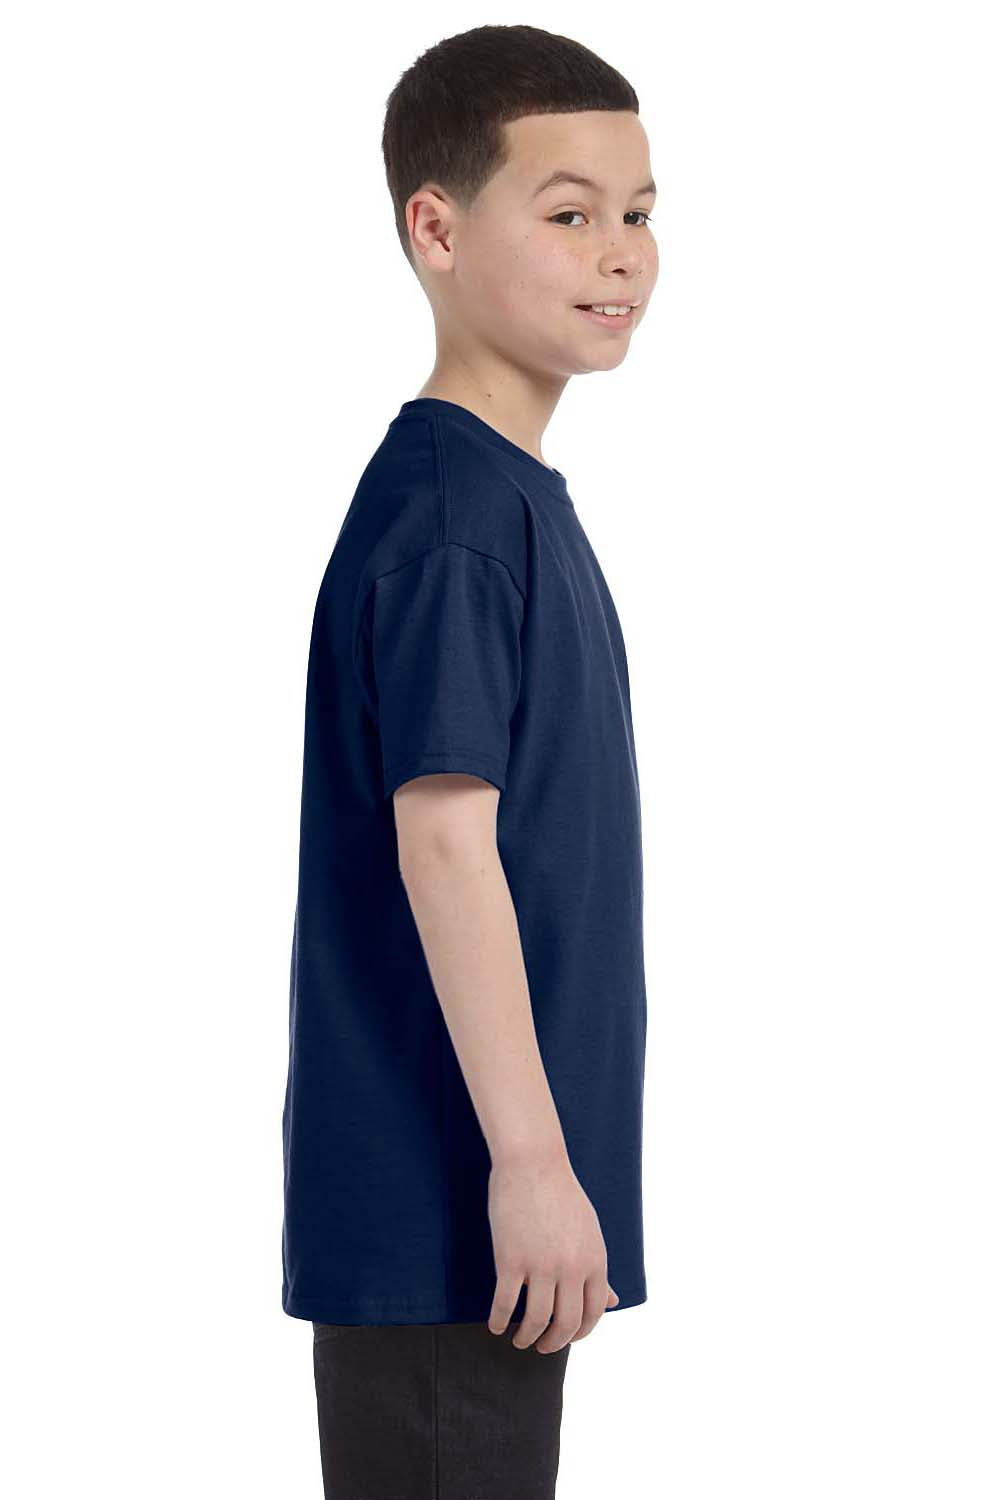 Jerzees 29B Youth Dri-Power Moisture Wicking Short Sleeve Crewneck T-Shirt Navy Blue Side